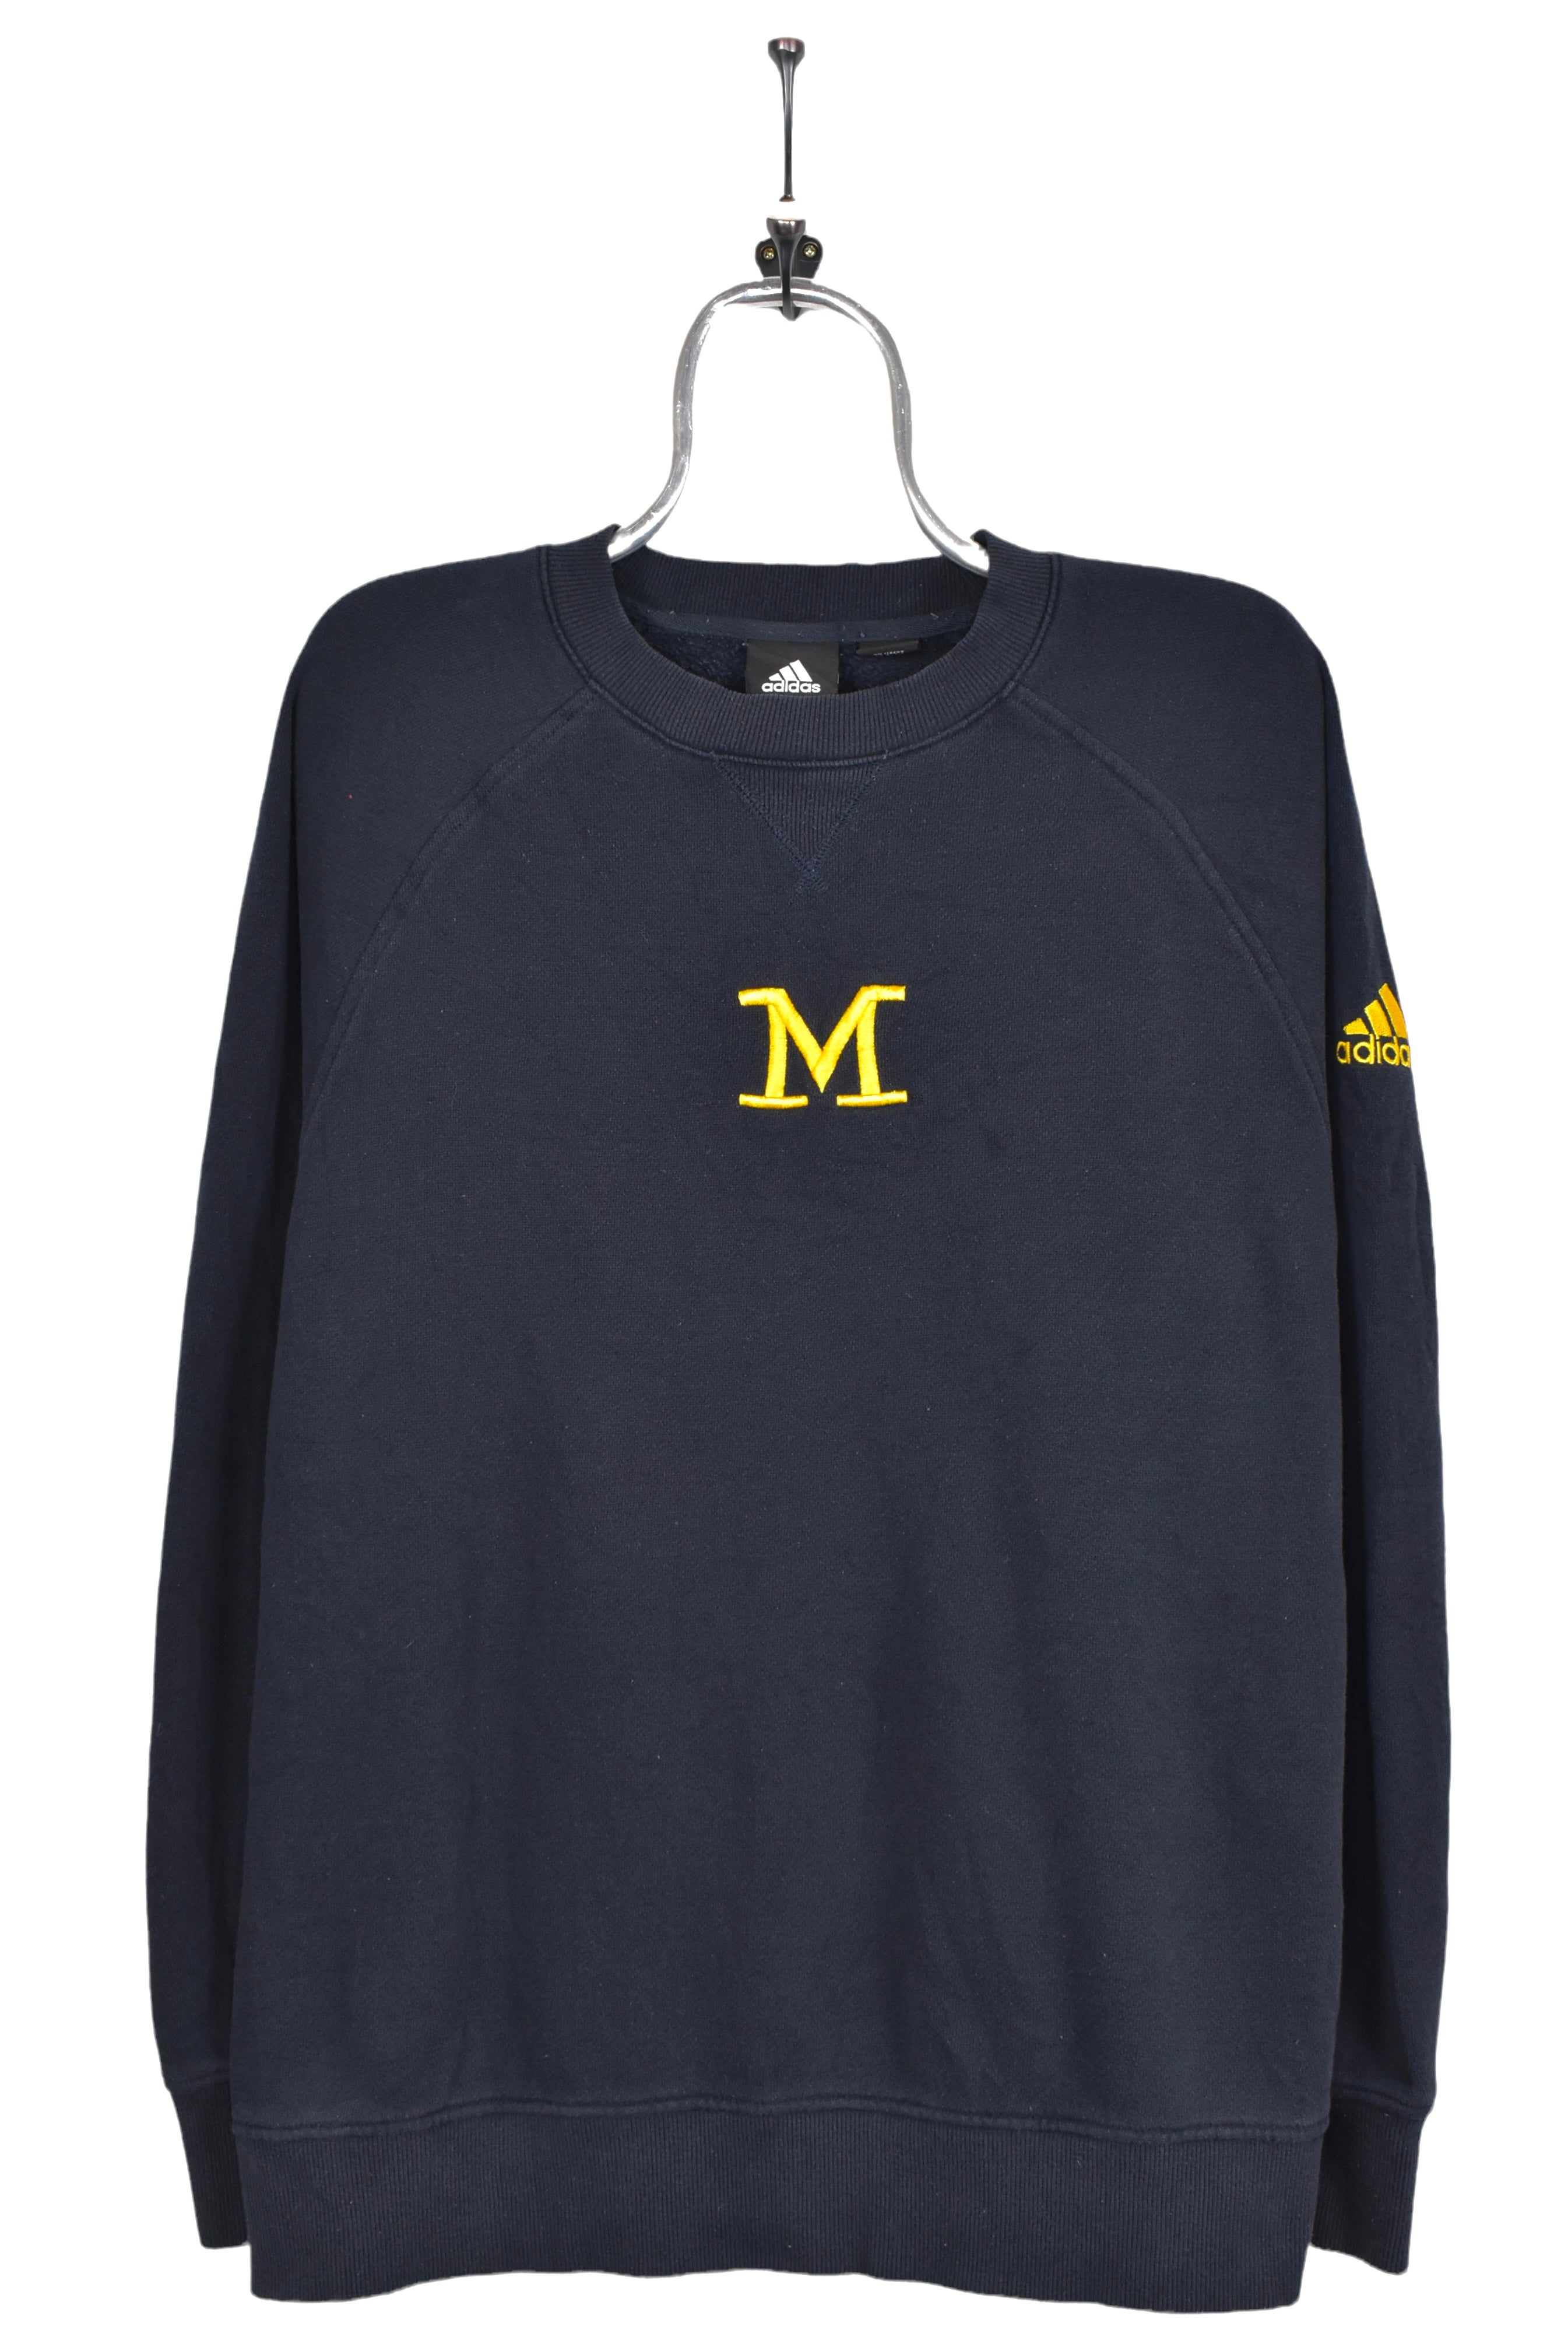 Vintage University of Michigan sweatshirt, black embroidered crewneck - AU L COLLEGE